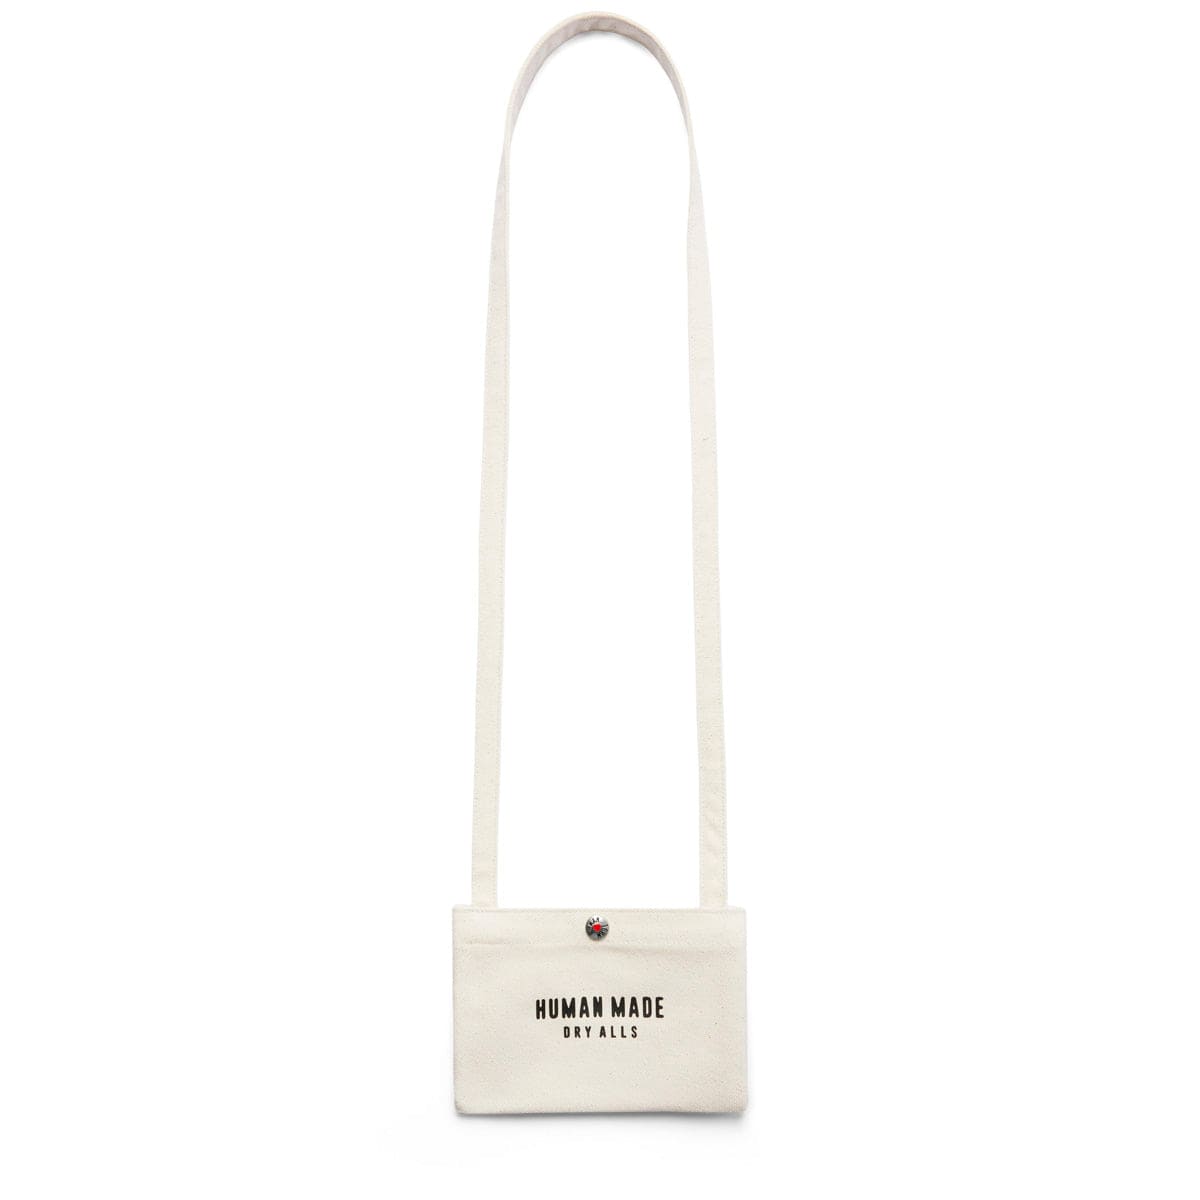 Off-White, Bags, Rare Offwhite Mini Box Bag